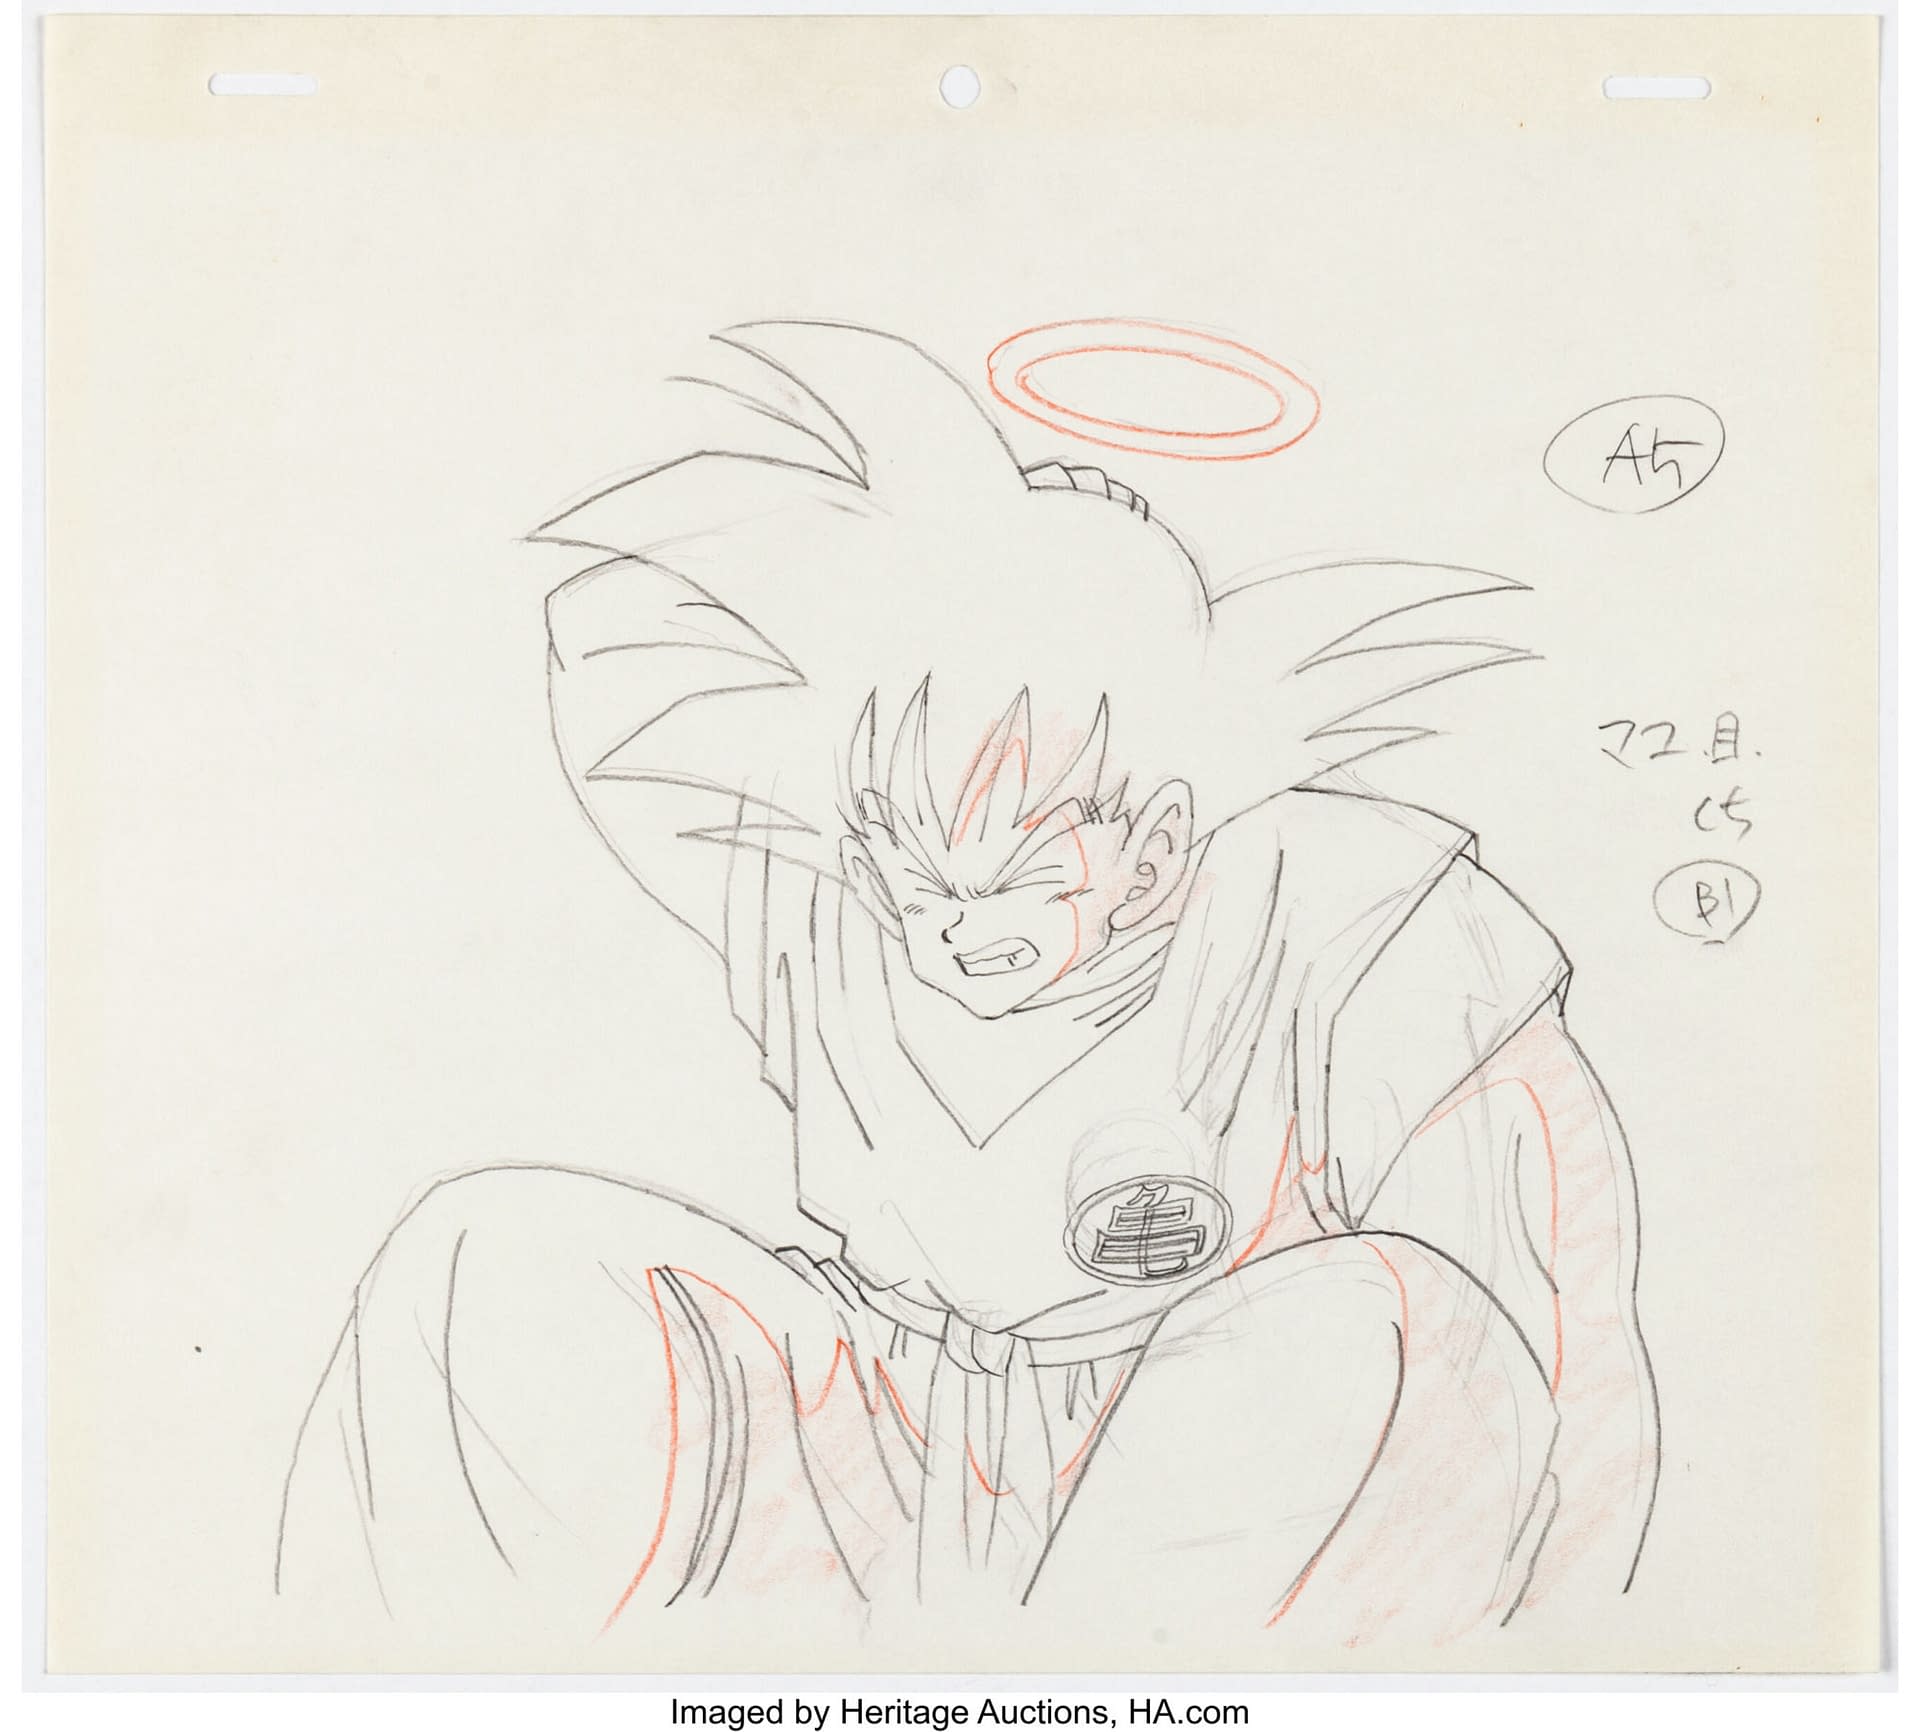 You Can Own This Original Dragon Ball Z Animation Drawing of Goku